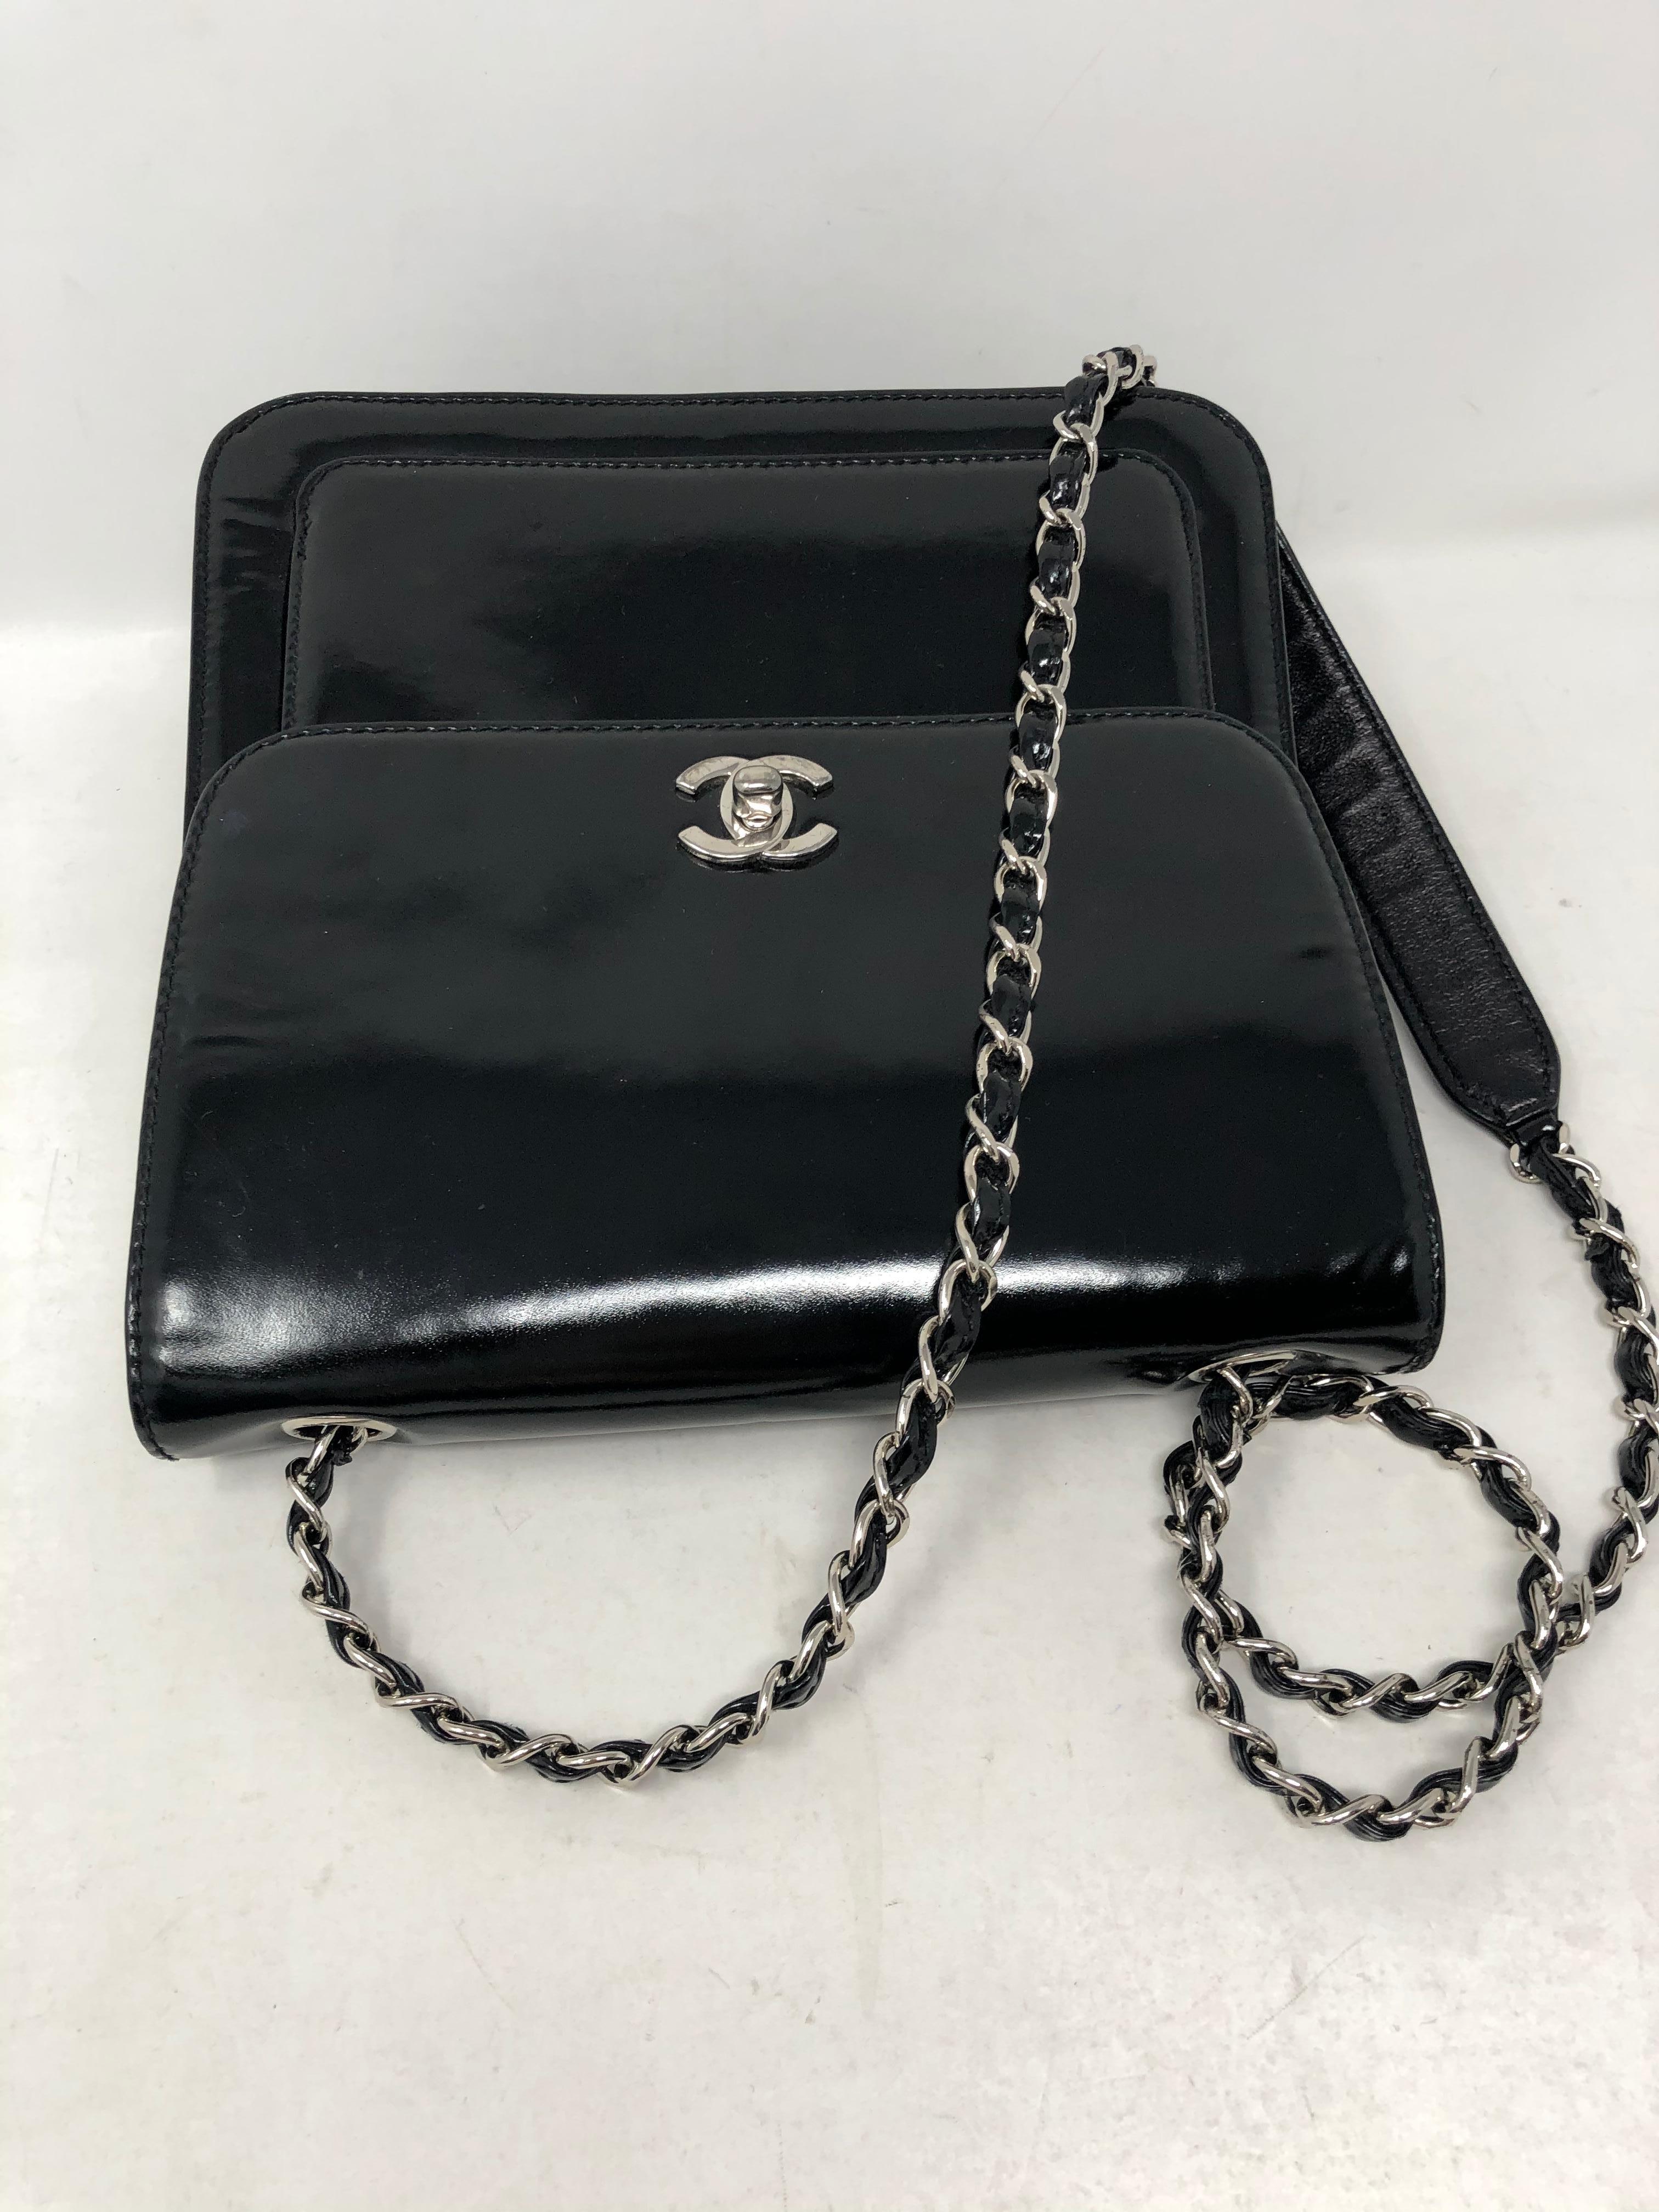 Chanel Black Patent Leather Bag  1